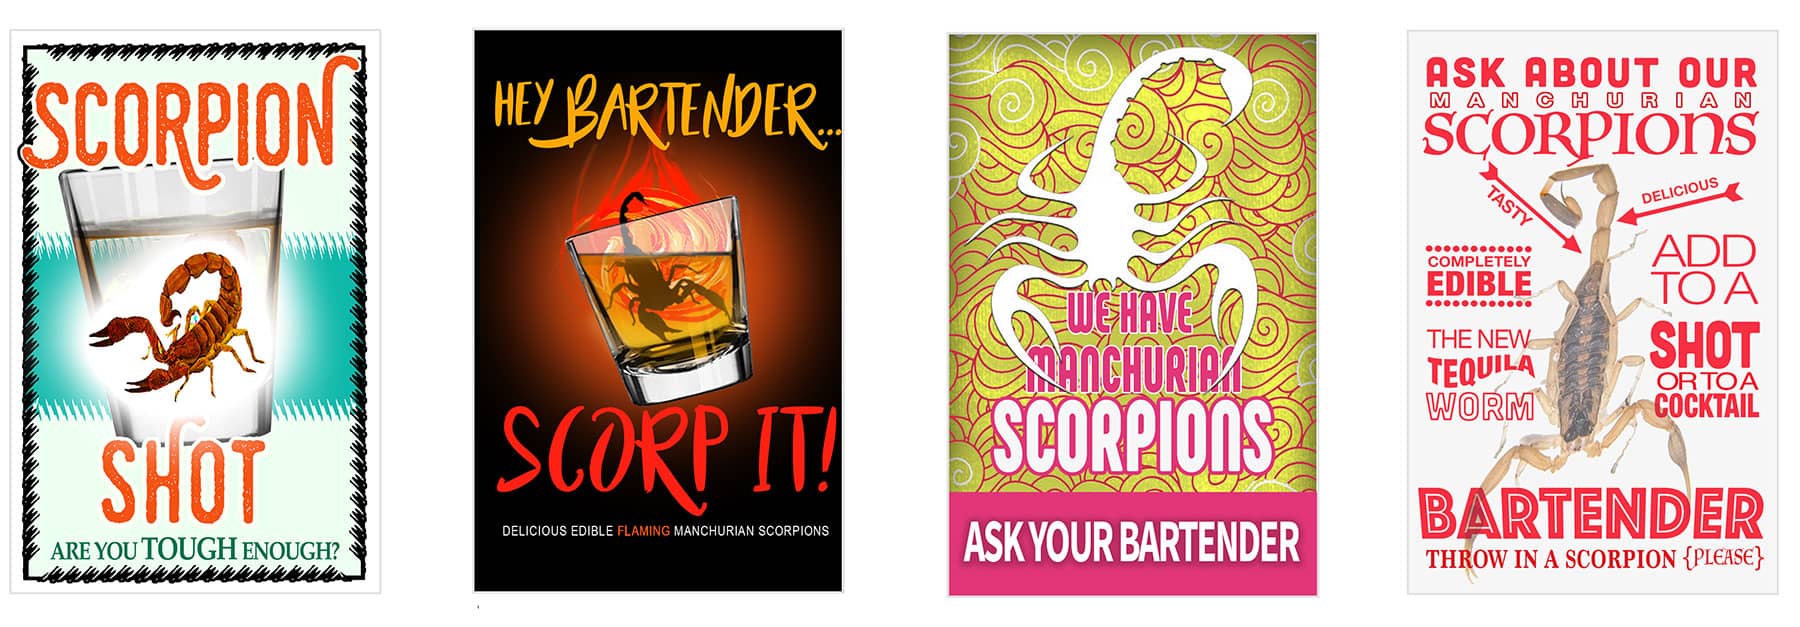 Free Scorpion Marketing Materials